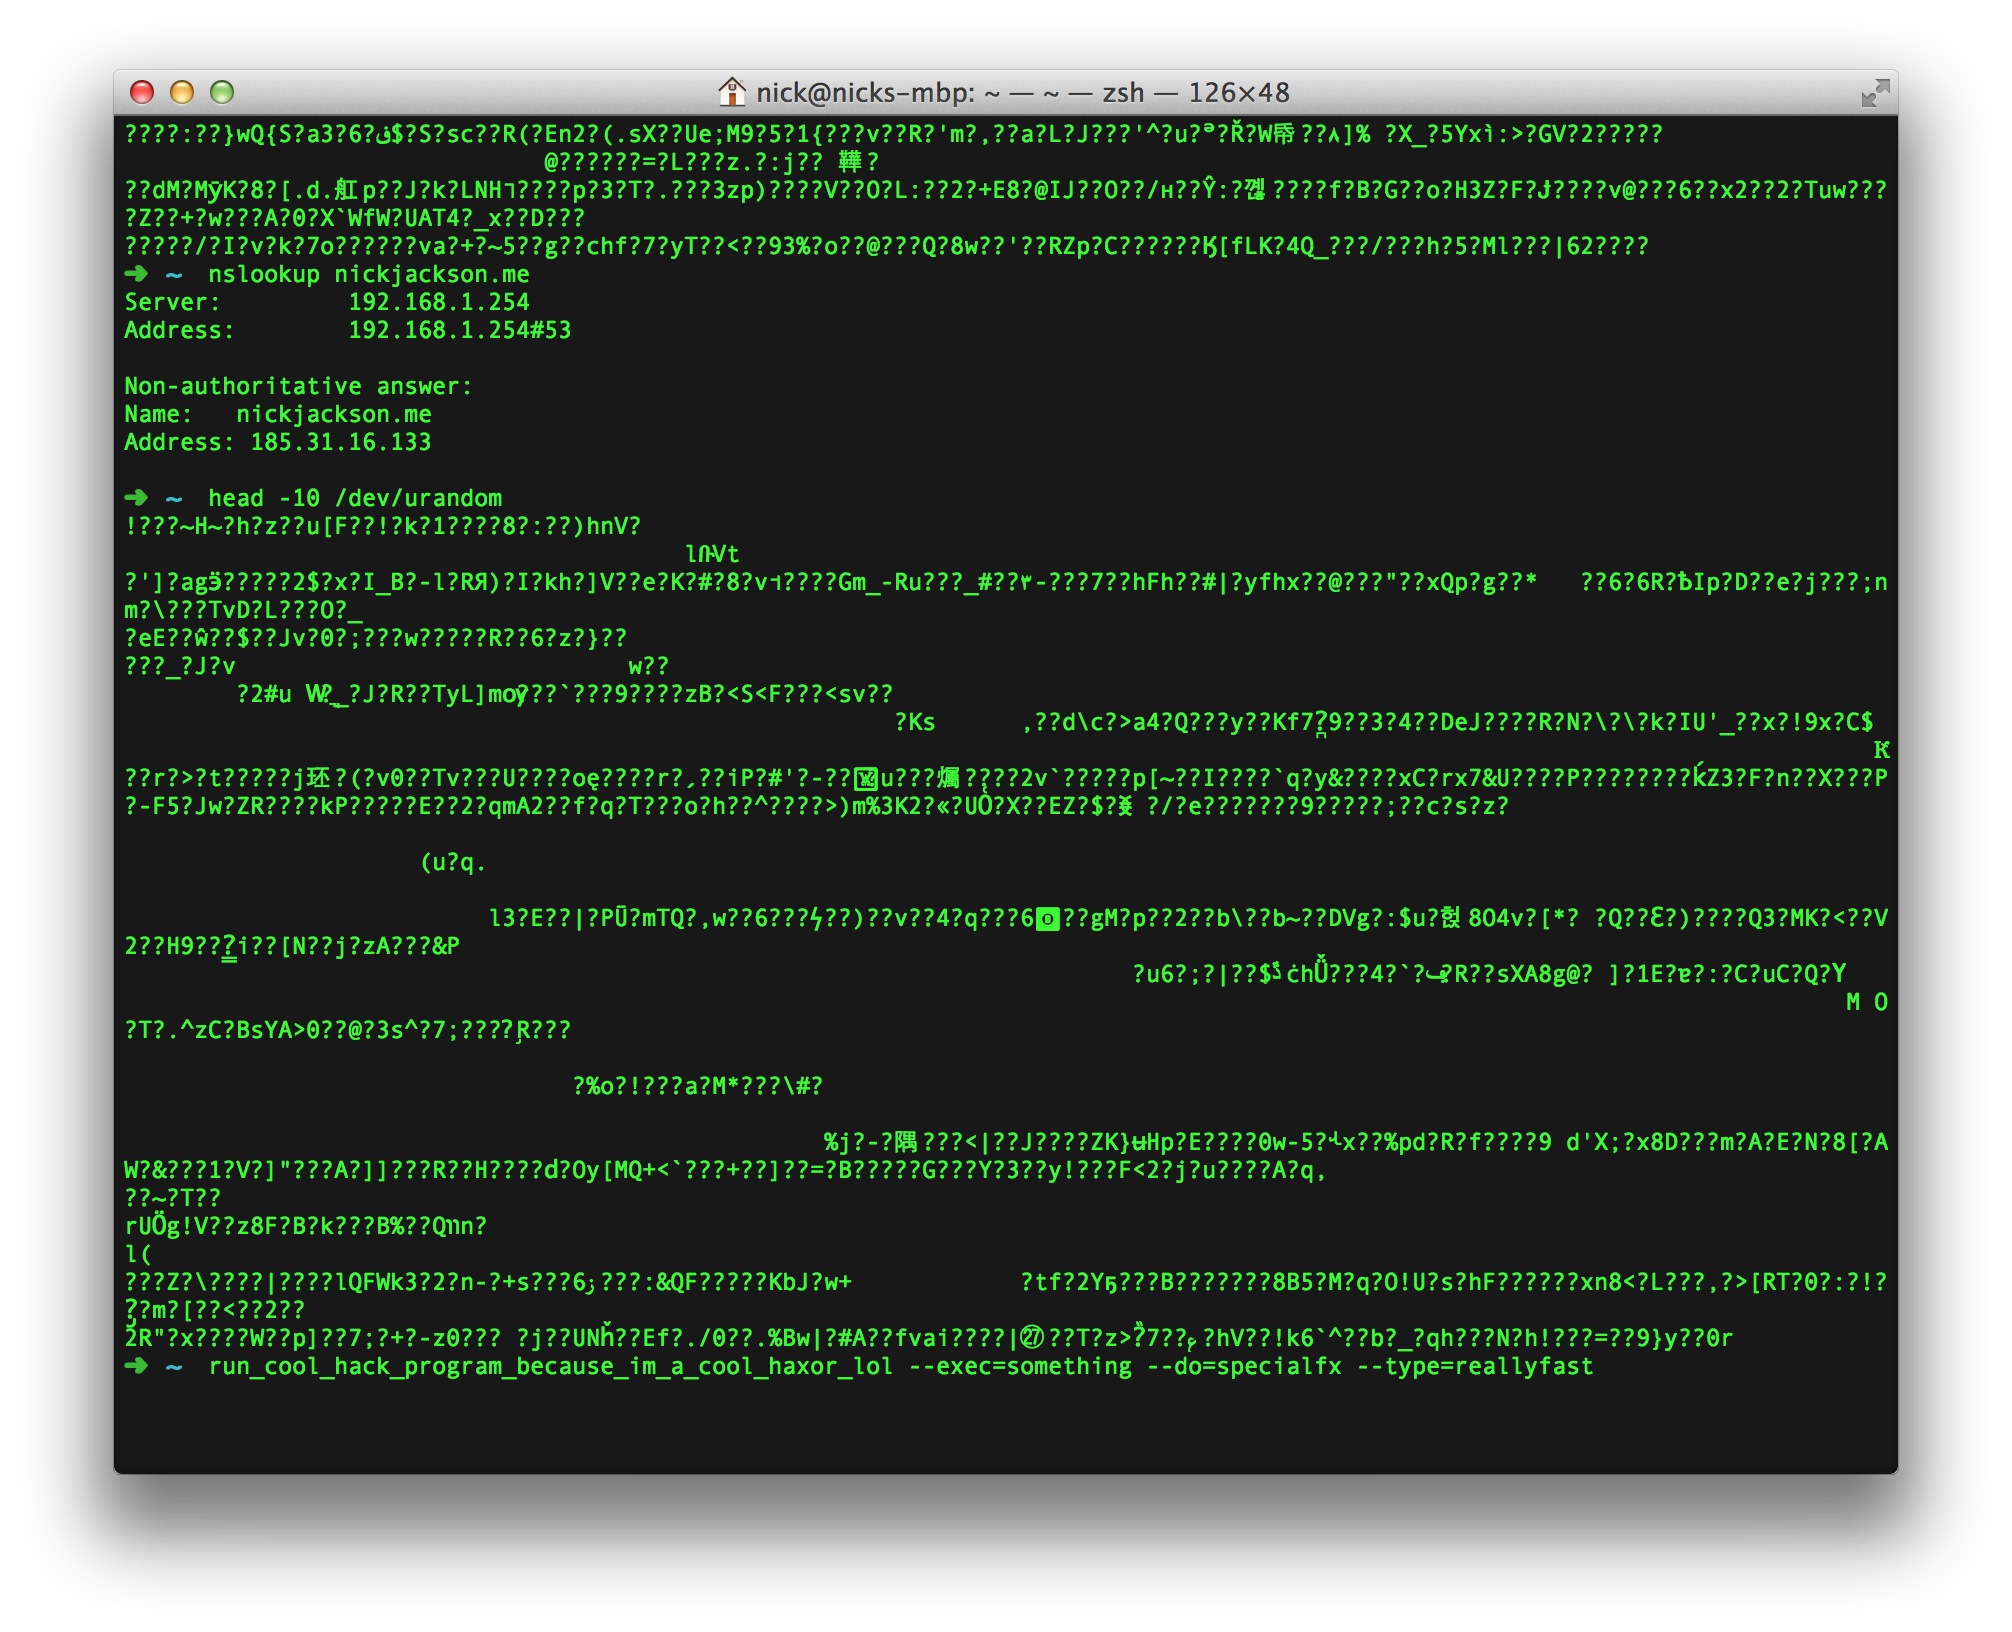 A screenshot of my terminal, showing an IP address amid gibberish.